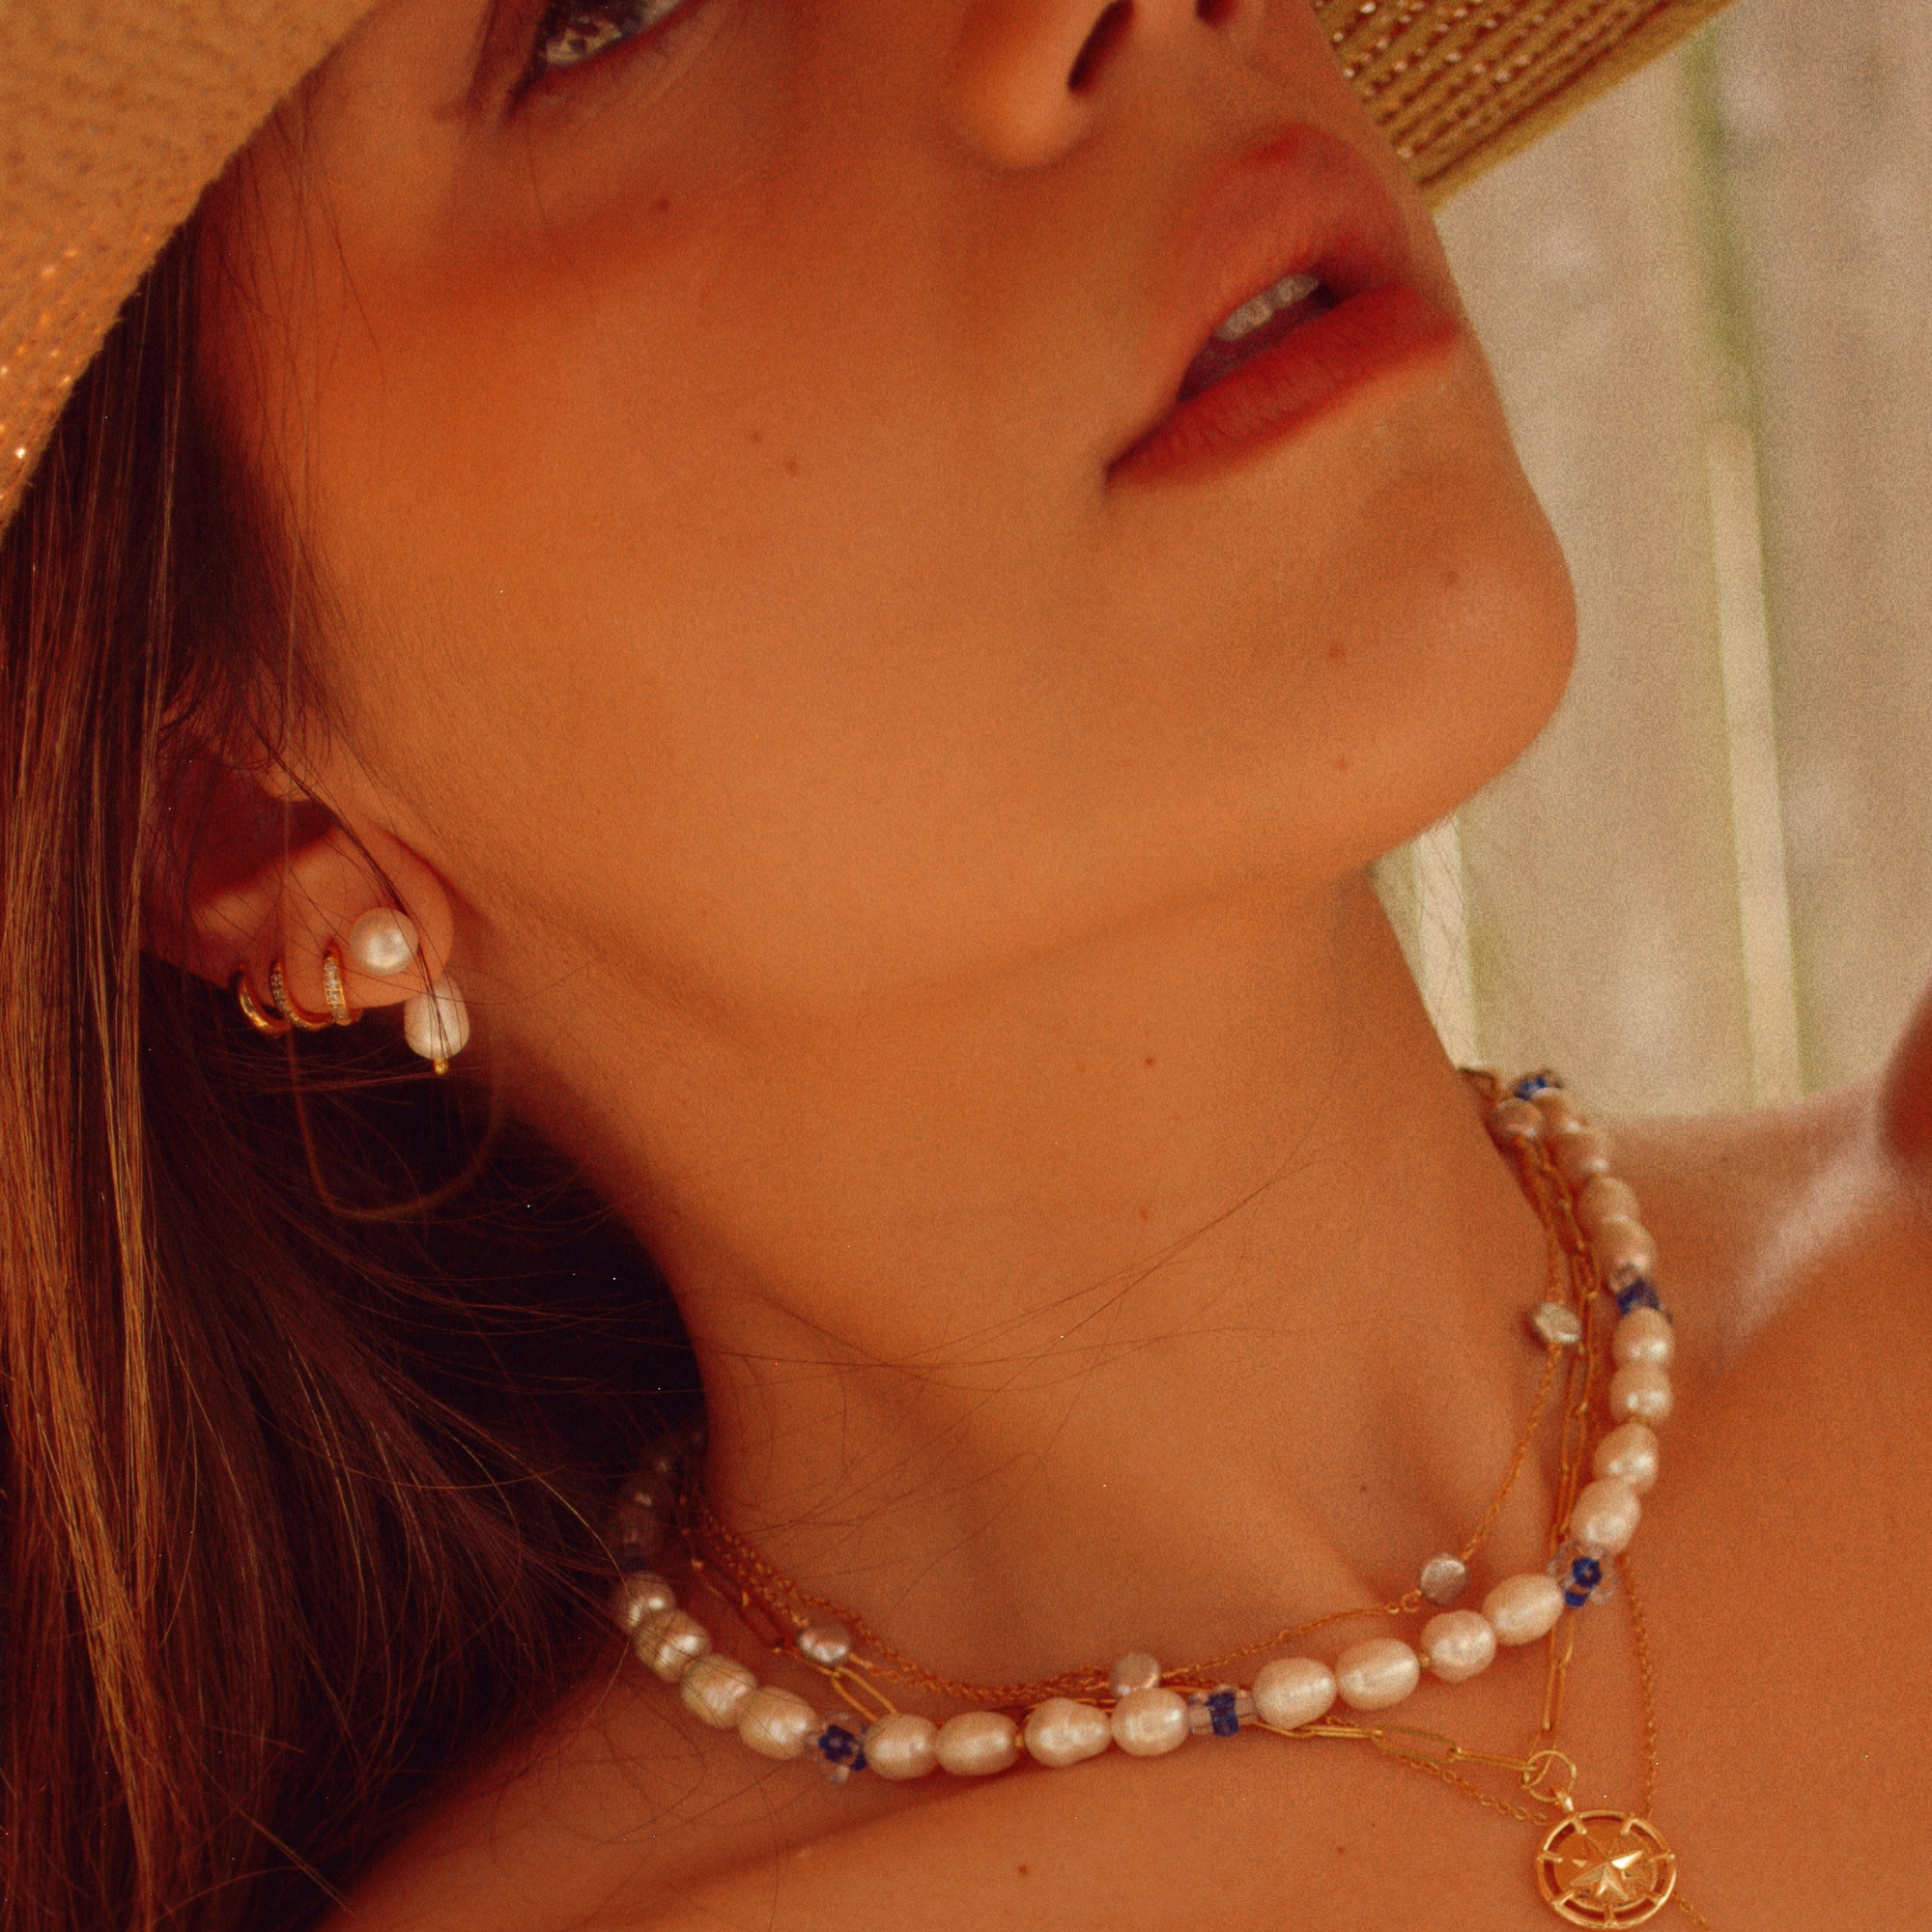 summer jewelry